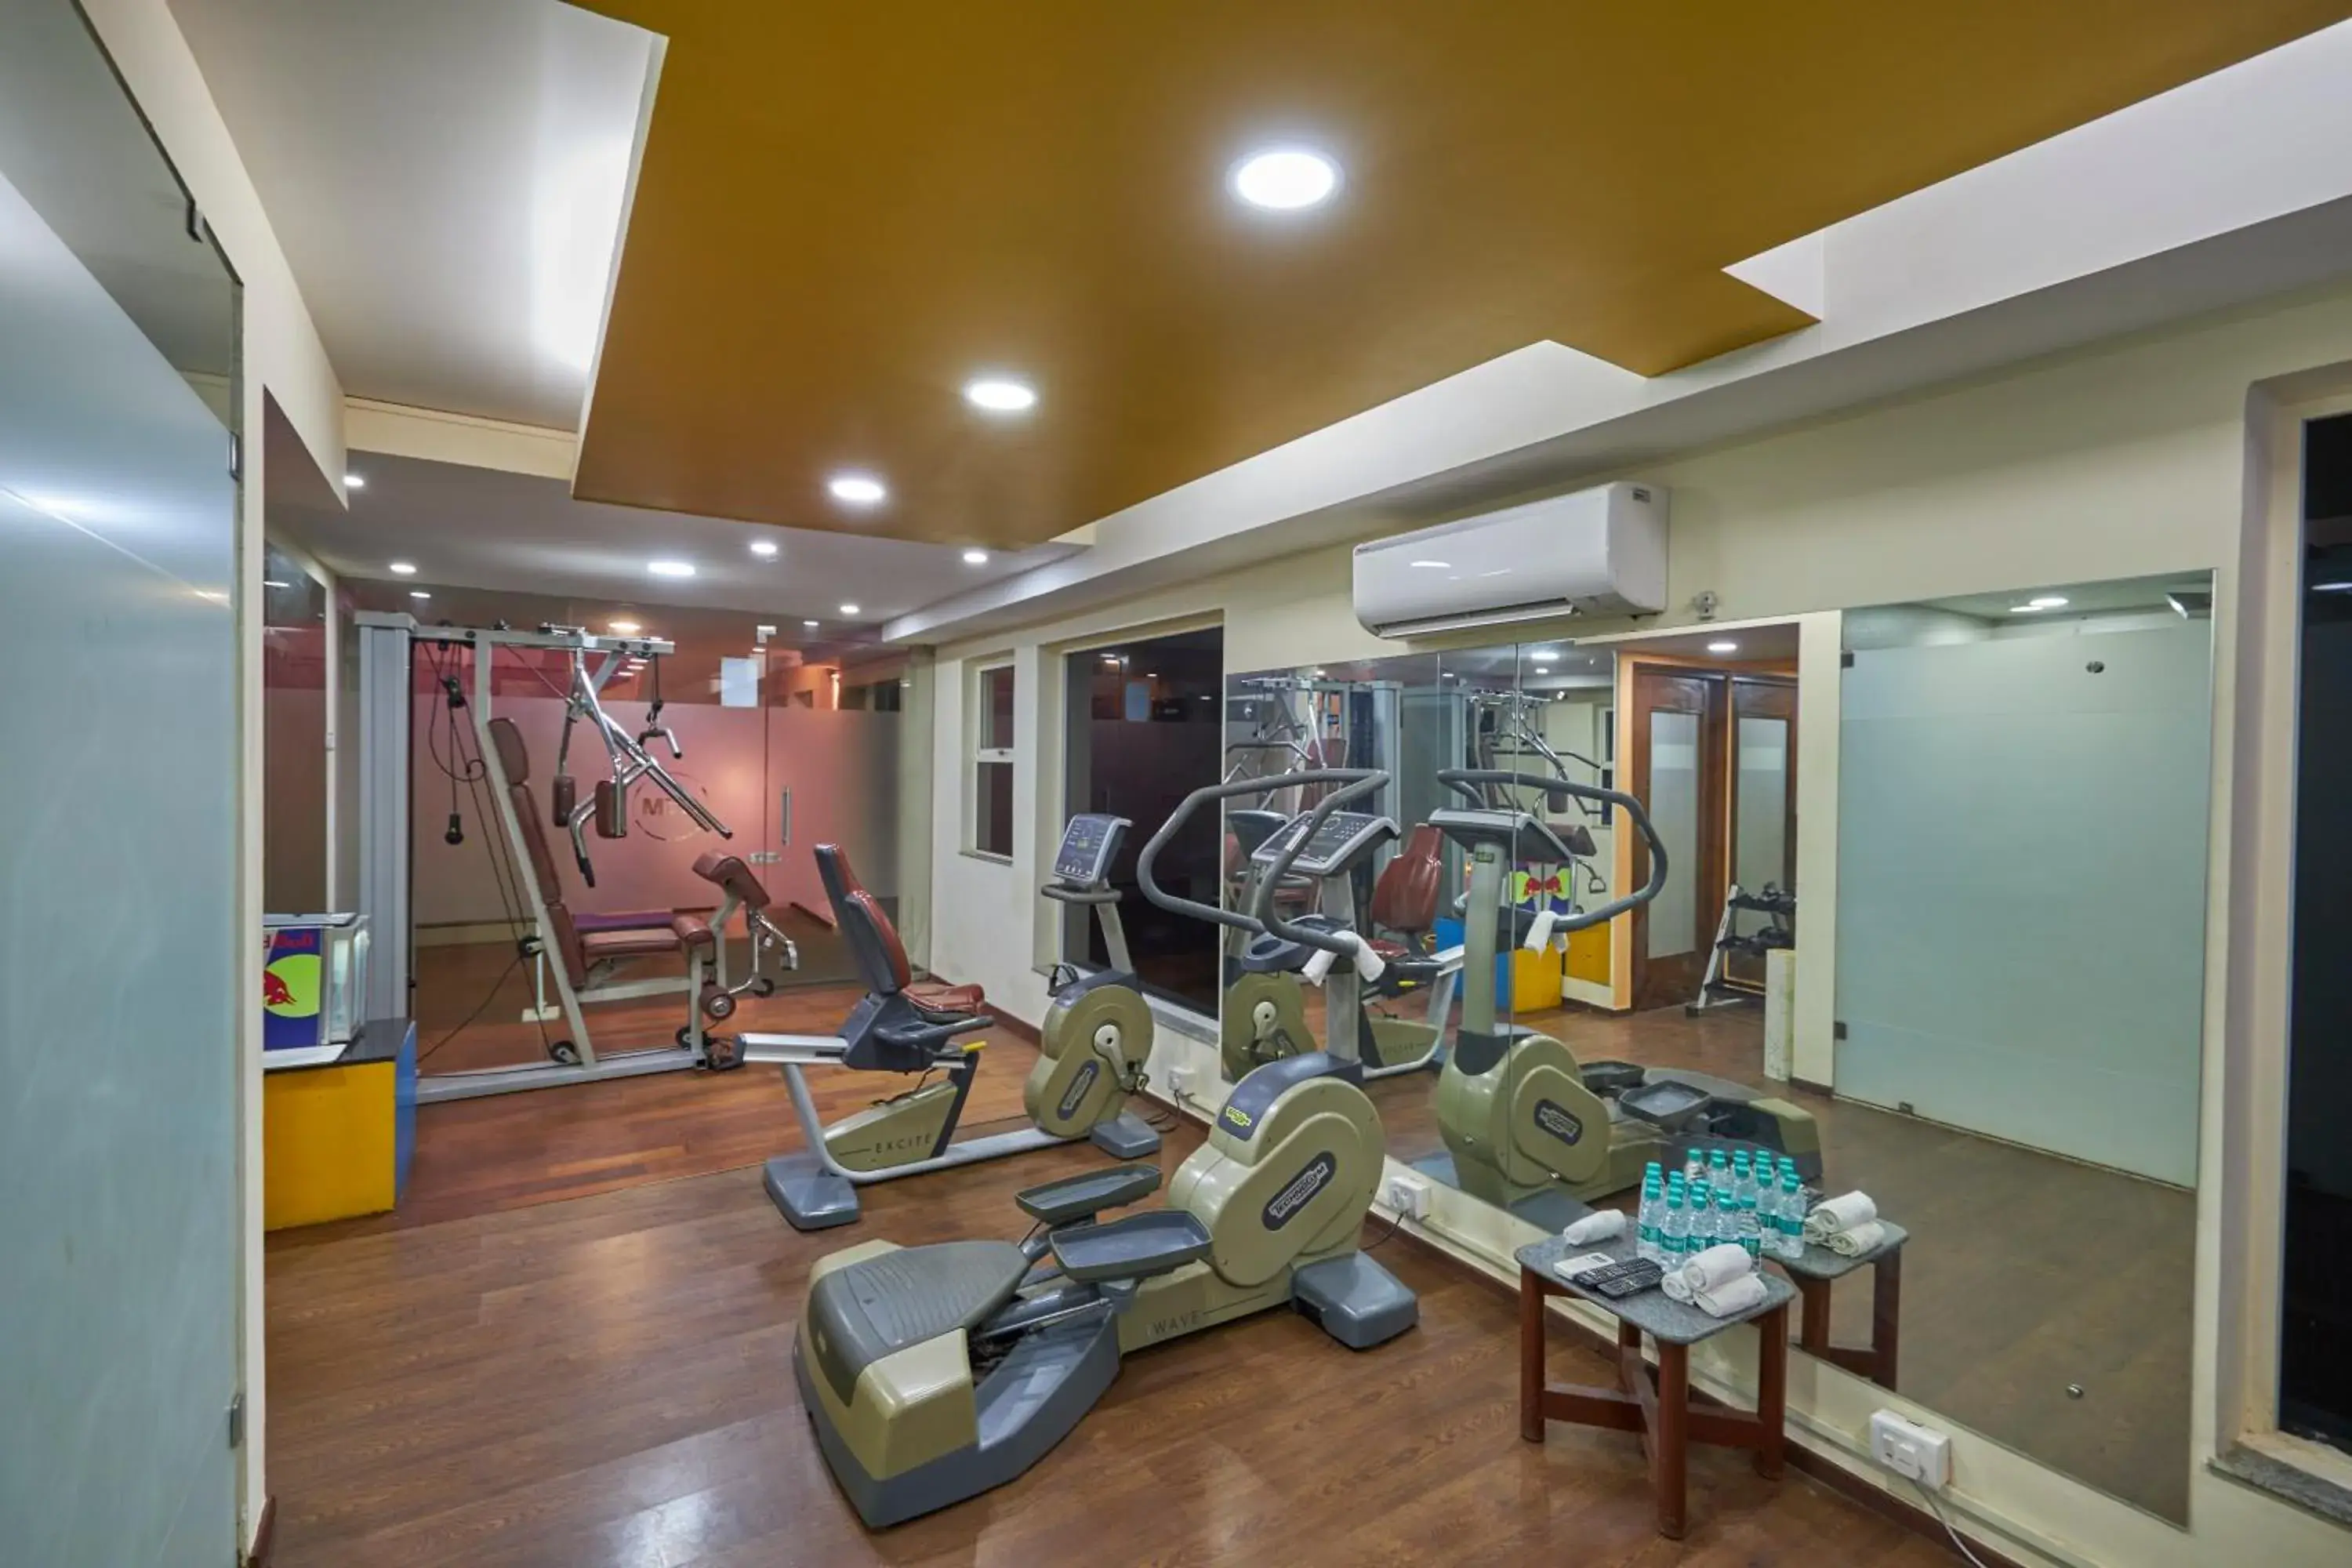 Fitness centre/facilities, Fitness Center/Facilities in Royal Orchid Beach Resort & Spa, Utorda Beach Goa